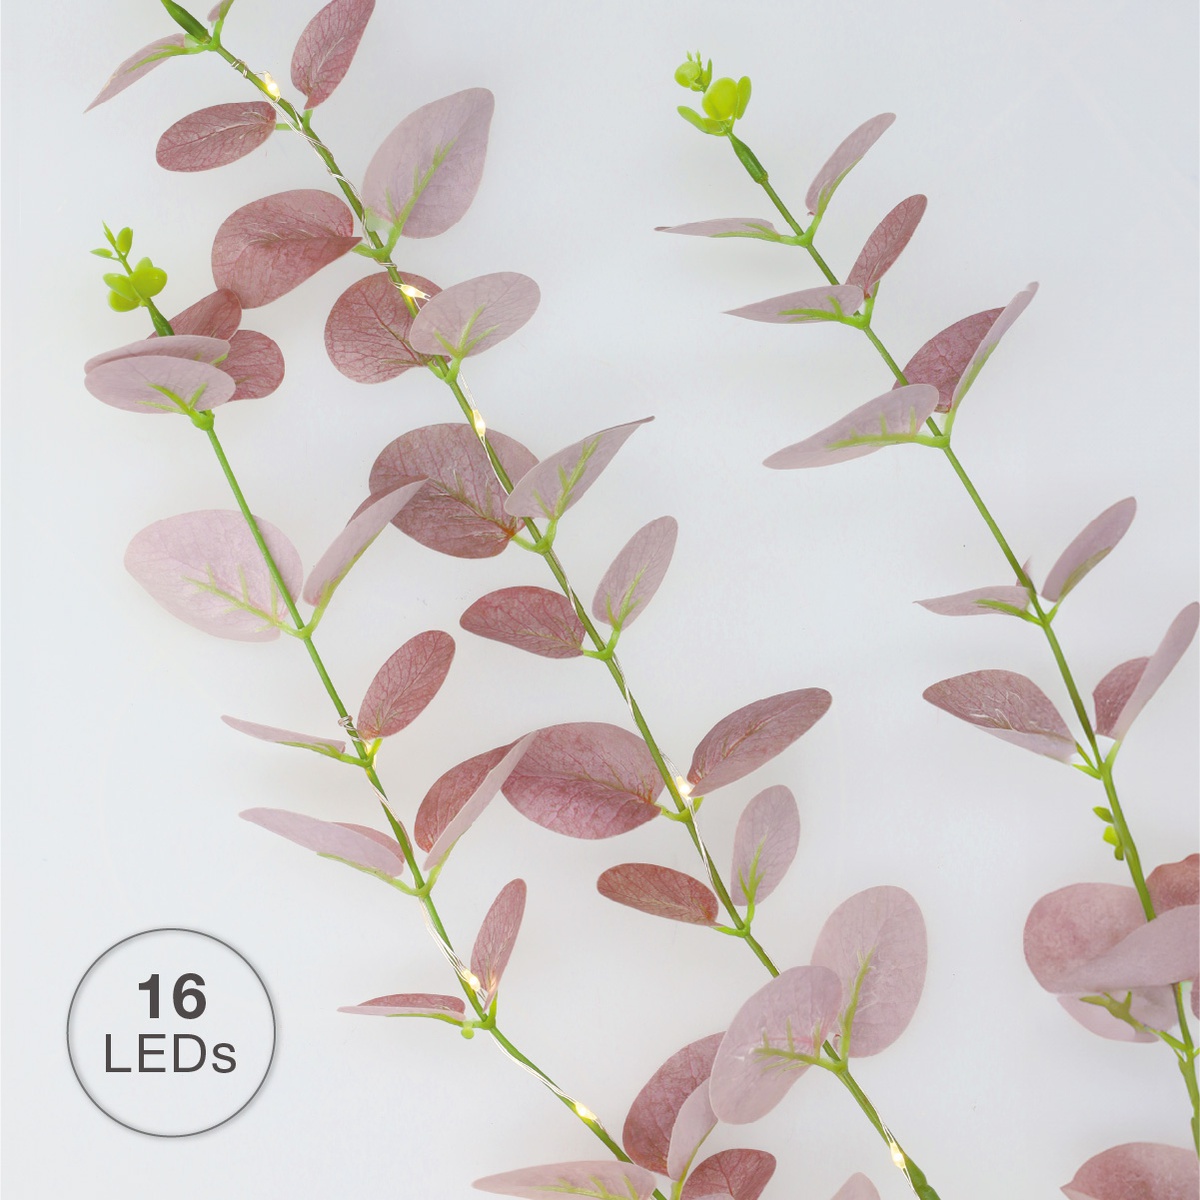 Rama decorativa LED de hojas de eucalipto rosas 0,83M Luz cálida